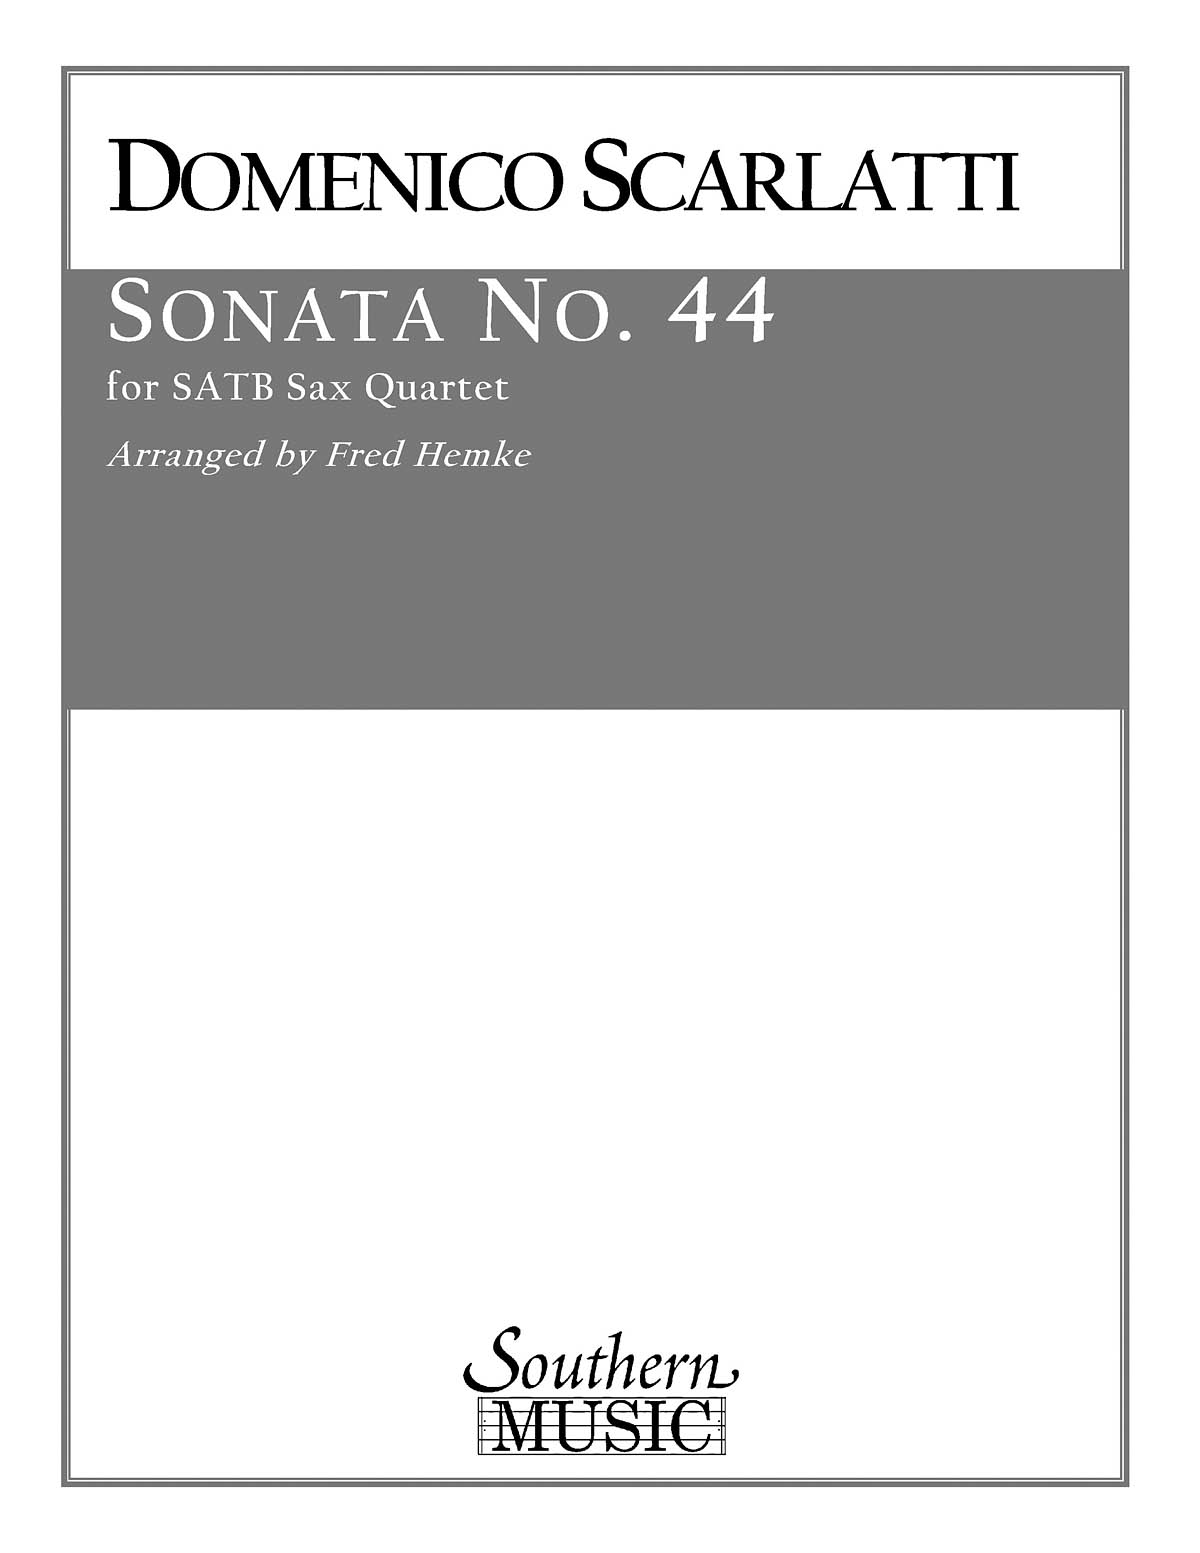 Sonata No 44